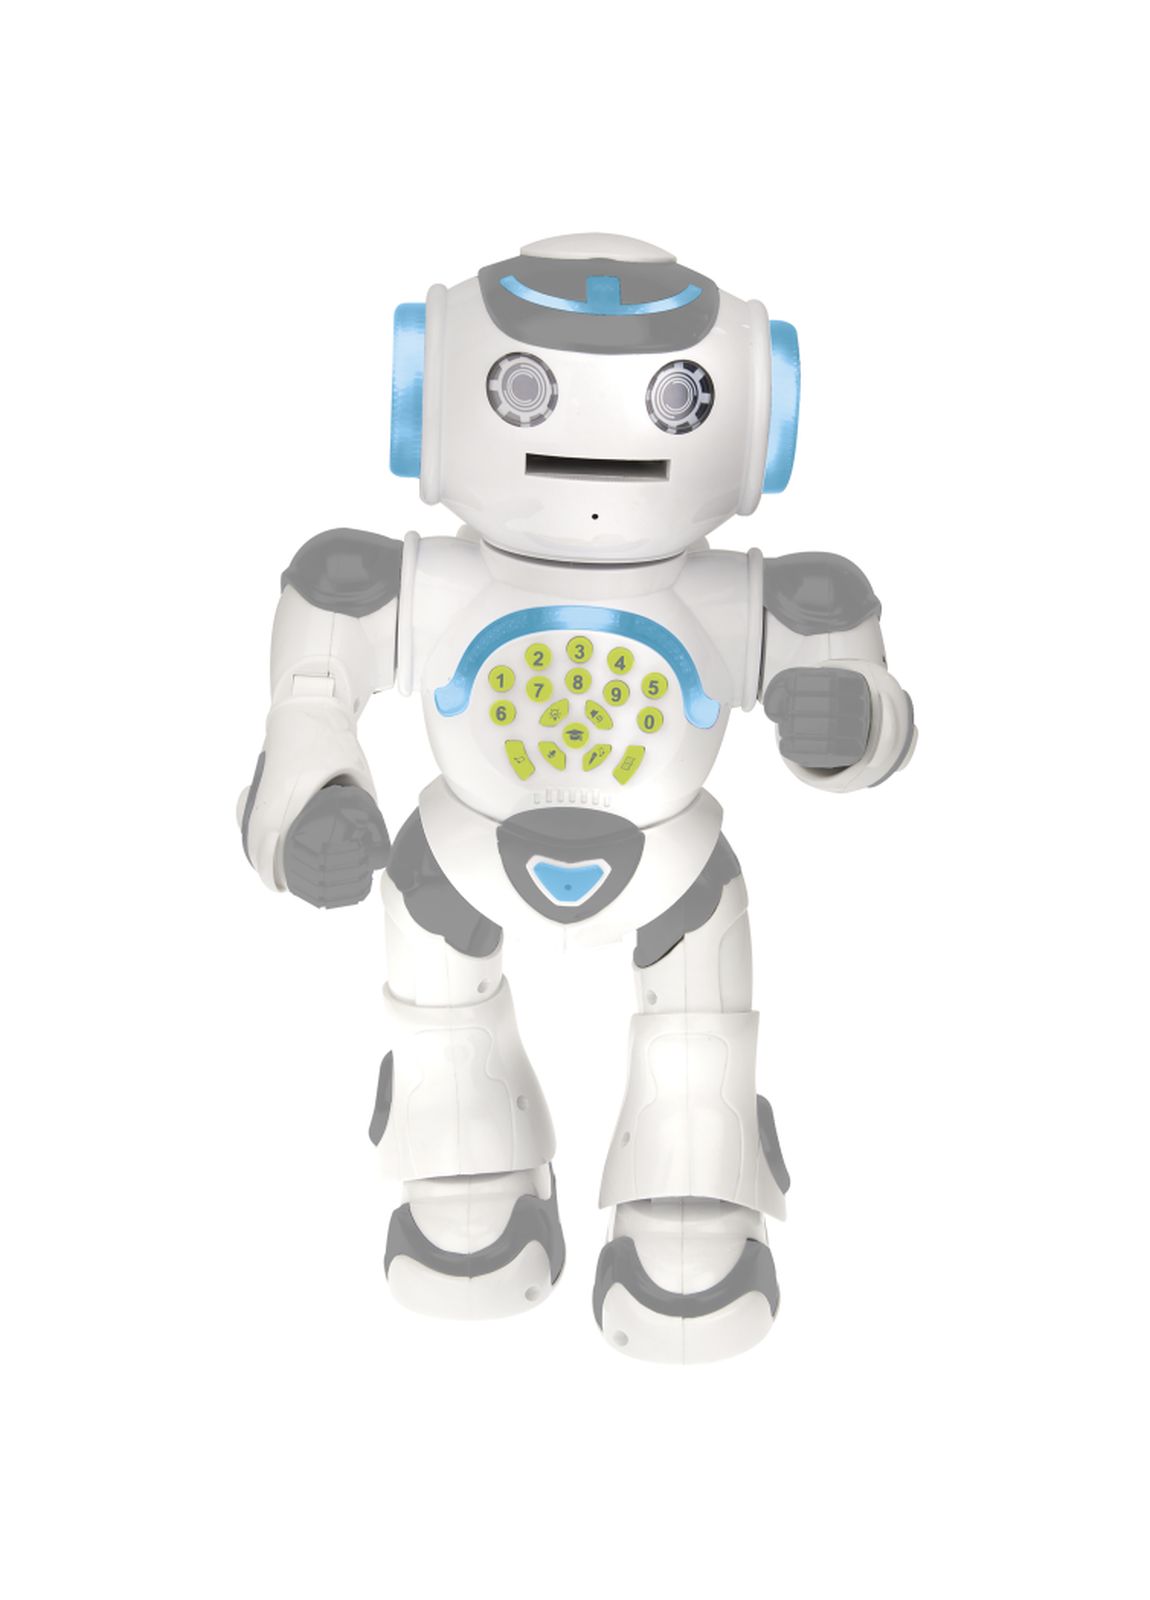 Robot Powerman - Toys Center